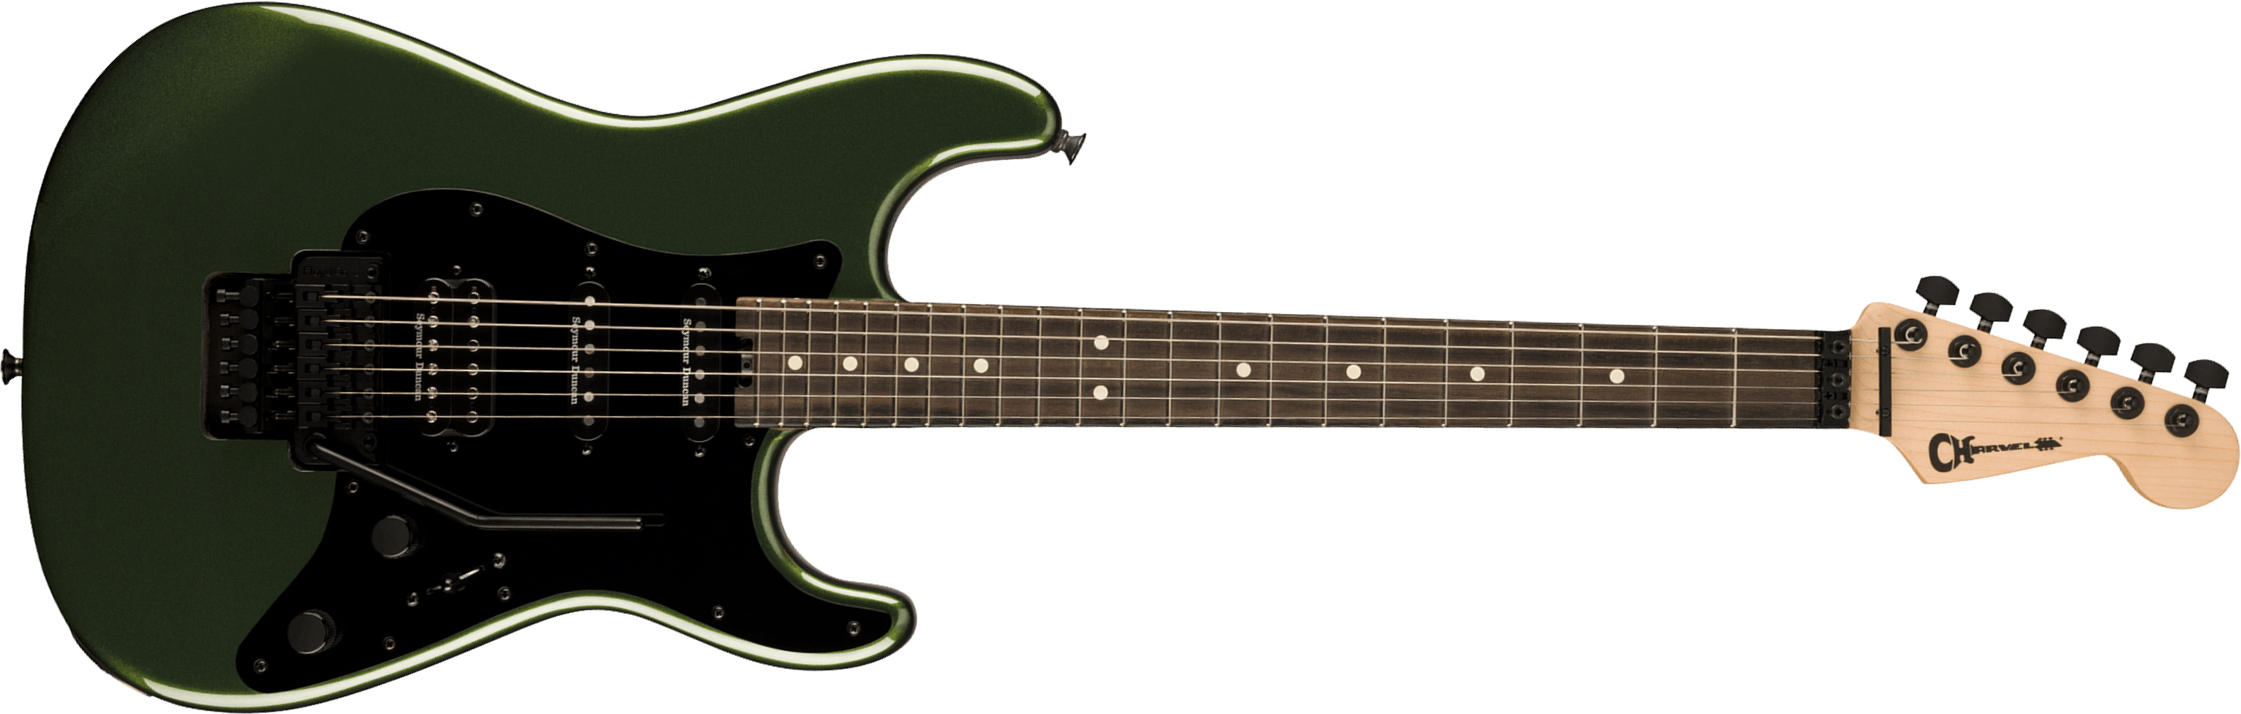 Charvel So-cal Style 1 Hss Fr E Pro-mod Seymour Duncan Eb - Lambo Green - E-Gitarre in Str-Form - Main picture